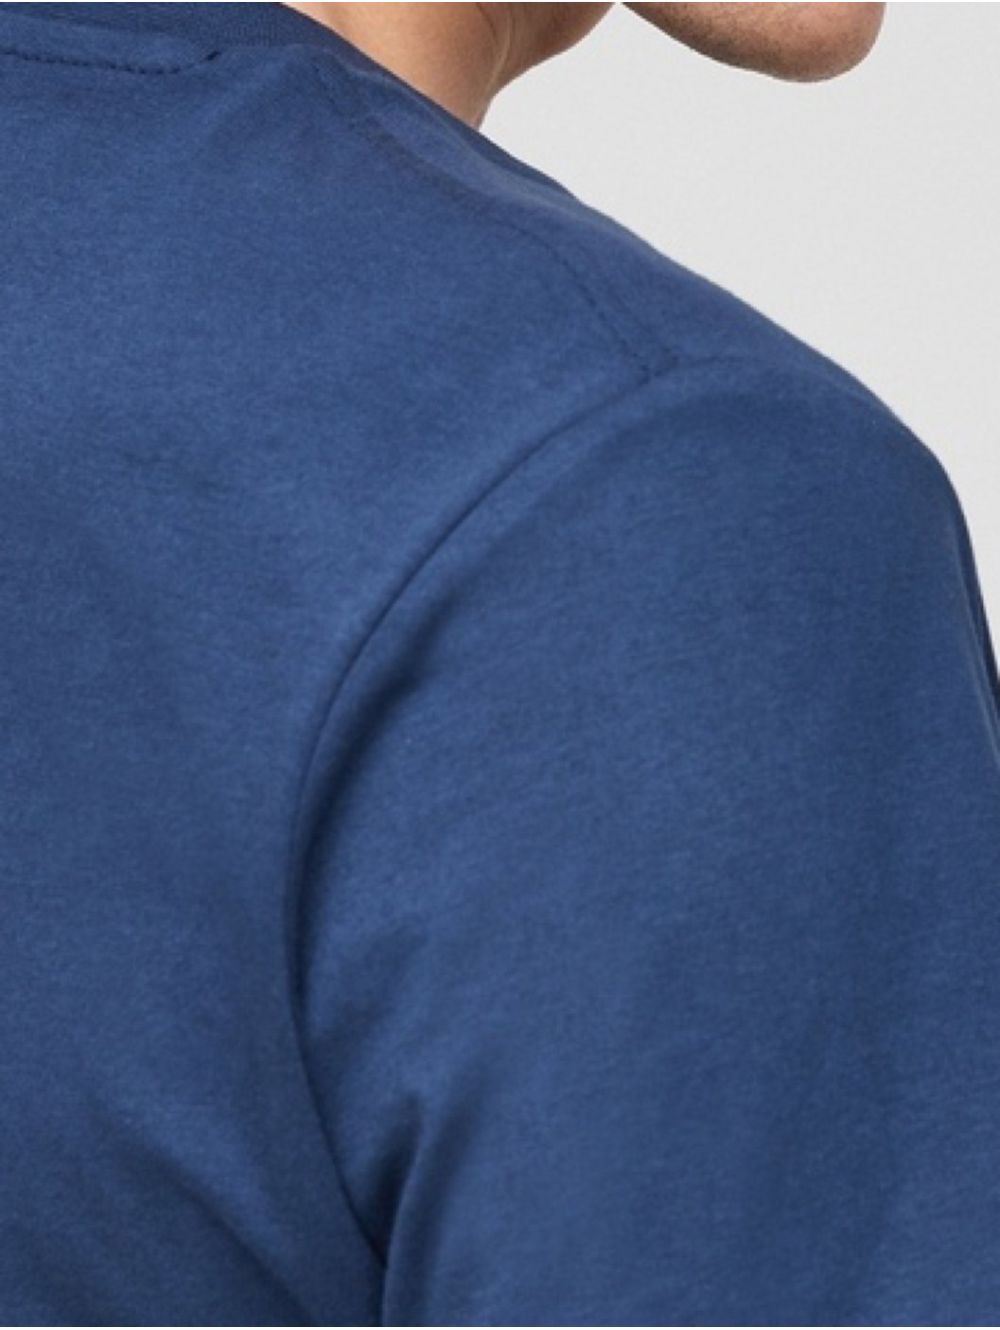 jersey T-Shirt Men\'s S.OLIVER 2057432-5693 Ocean short-sleeved blue Blue